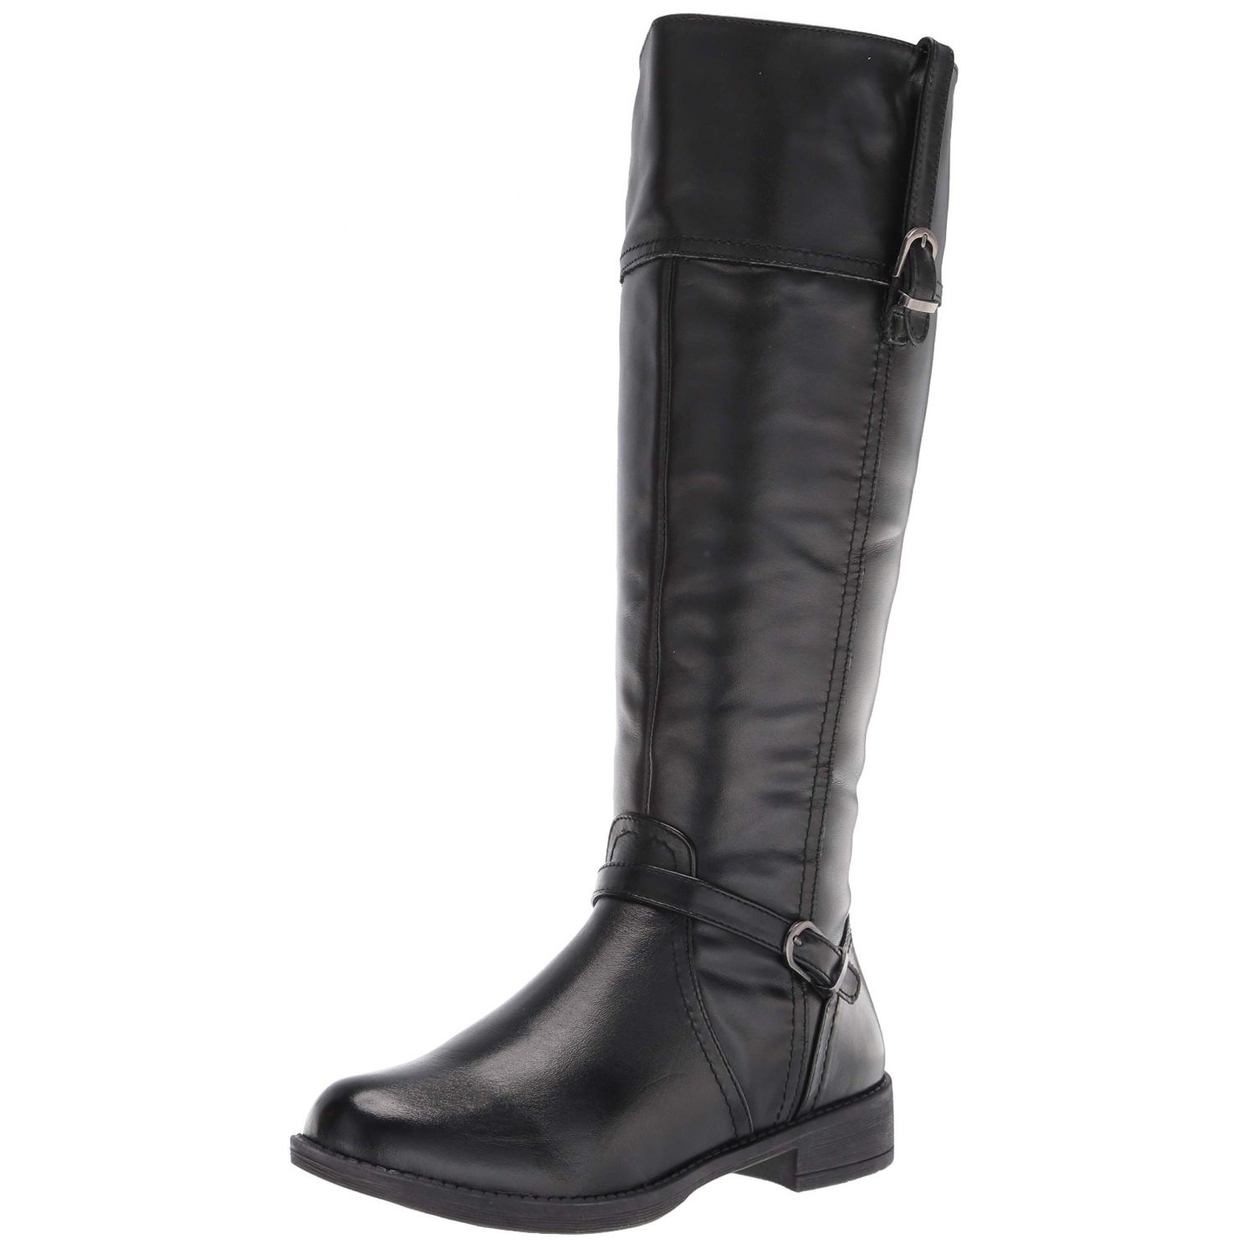 Propet Womens Tasha Zippered Casual Boots Knee High Low Heel 1-2 - Black BROWN - BROWN, 11 X-Wide